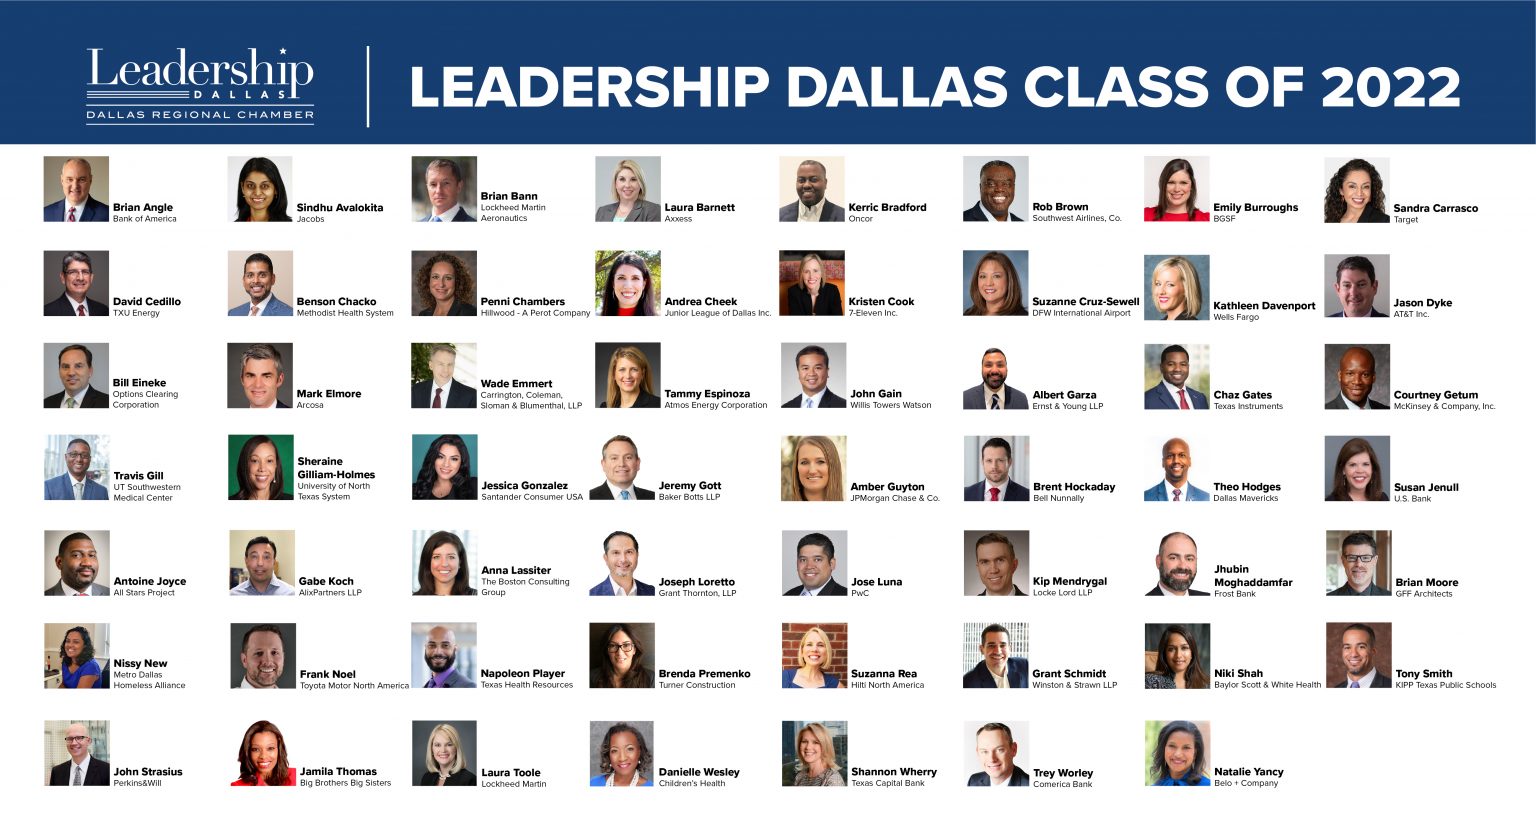 Leadership Dallas Class of 2022 Dallas Regional Chamber